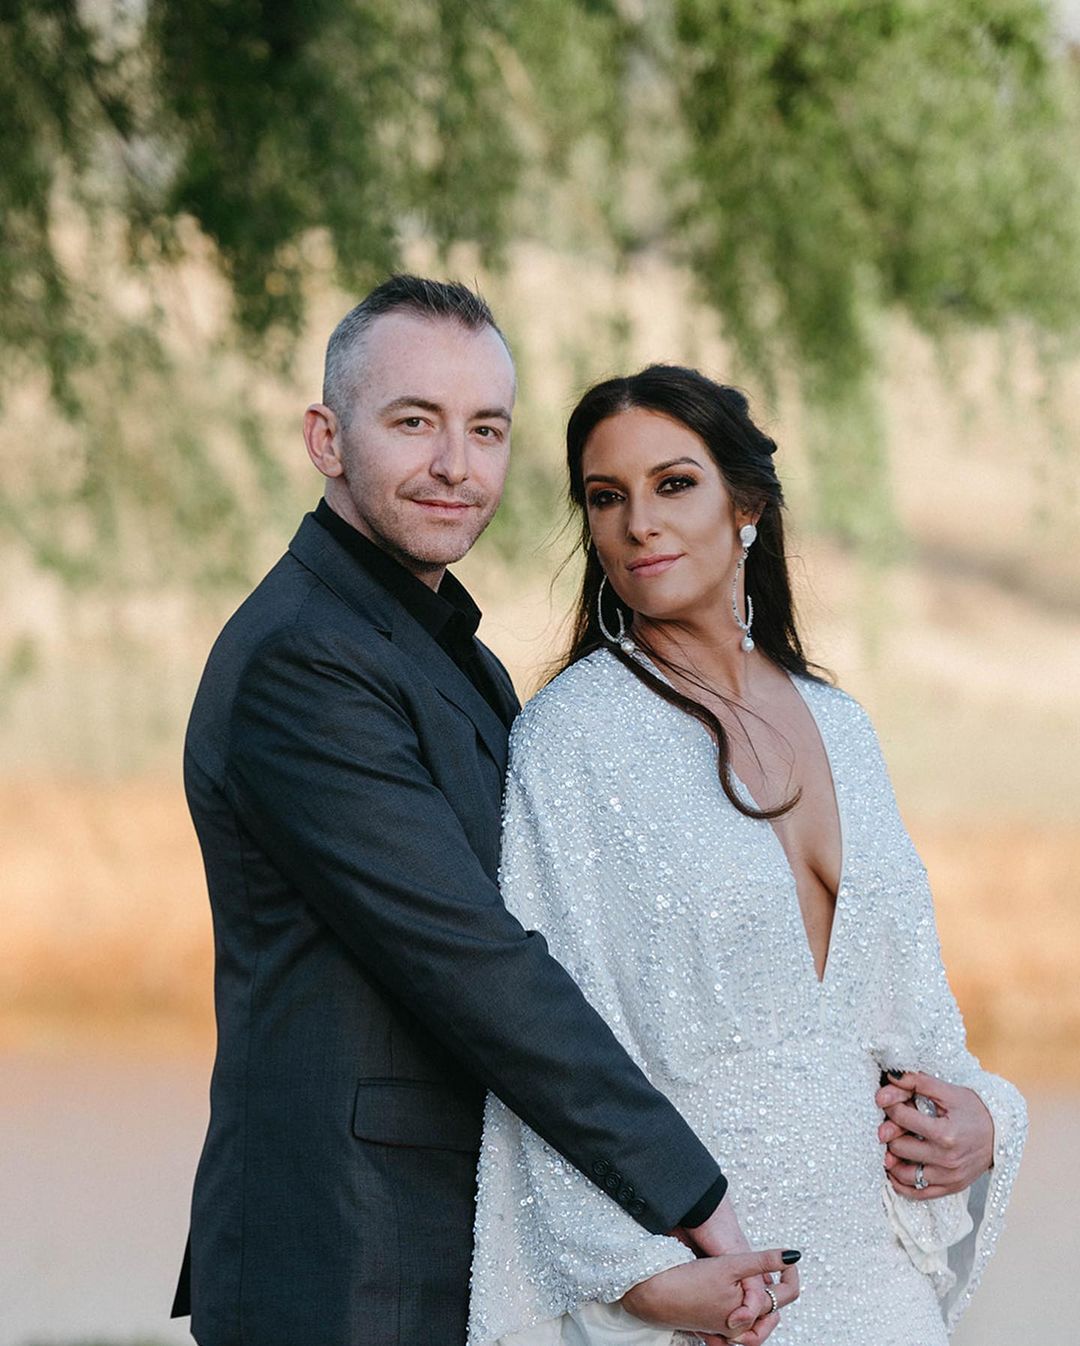 Nicole da Silva Had Intimate Wedding with Husband Chris Wingrove — Look at Her Personal Life